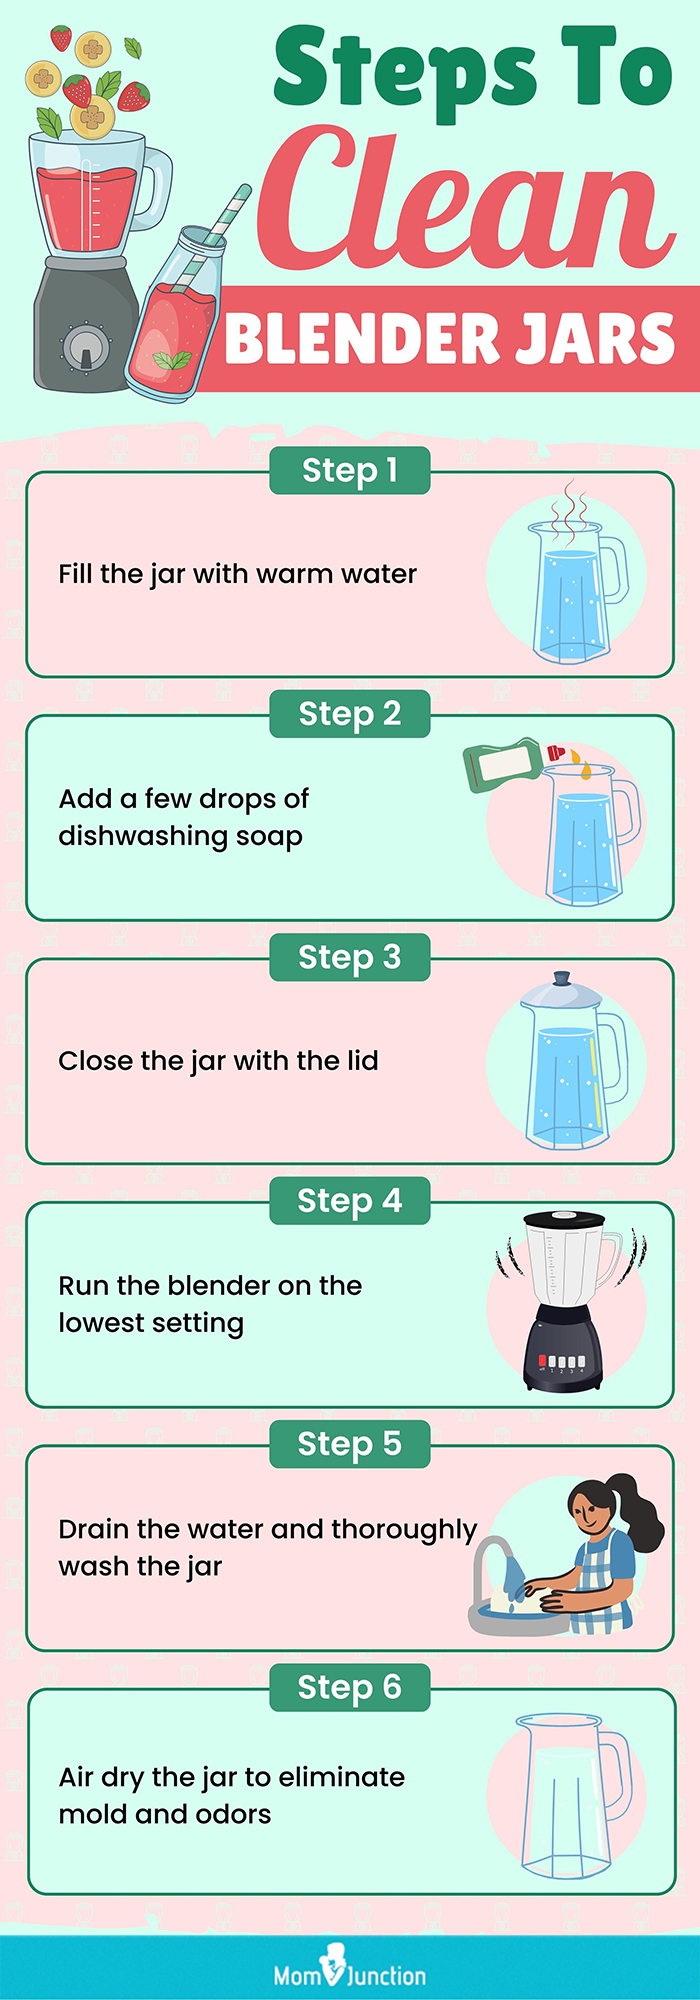 Steps To Clean Blender Jars (infographic)